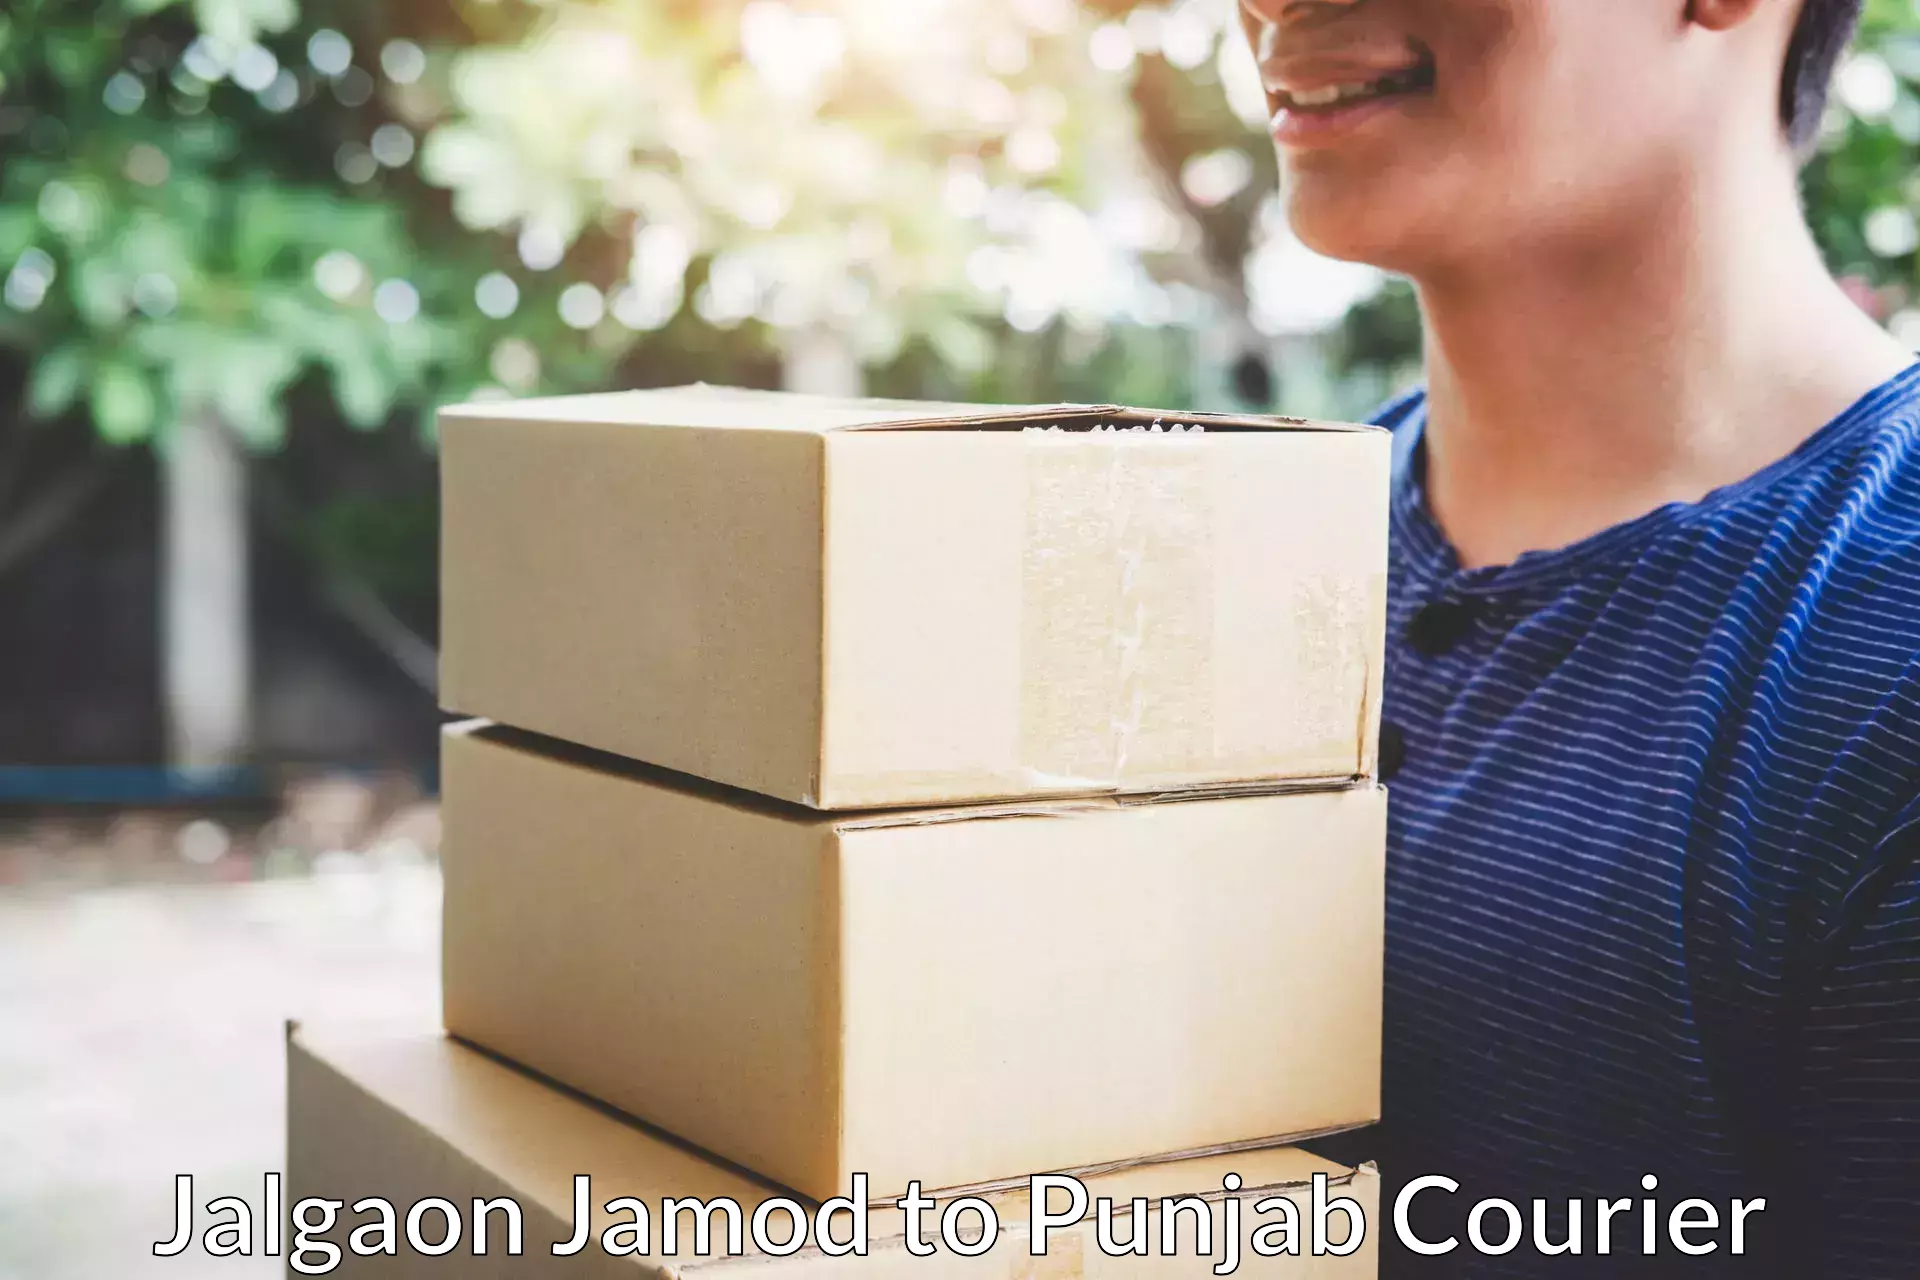 Furniture delivery service Jalgaon Jamod to Fazilka